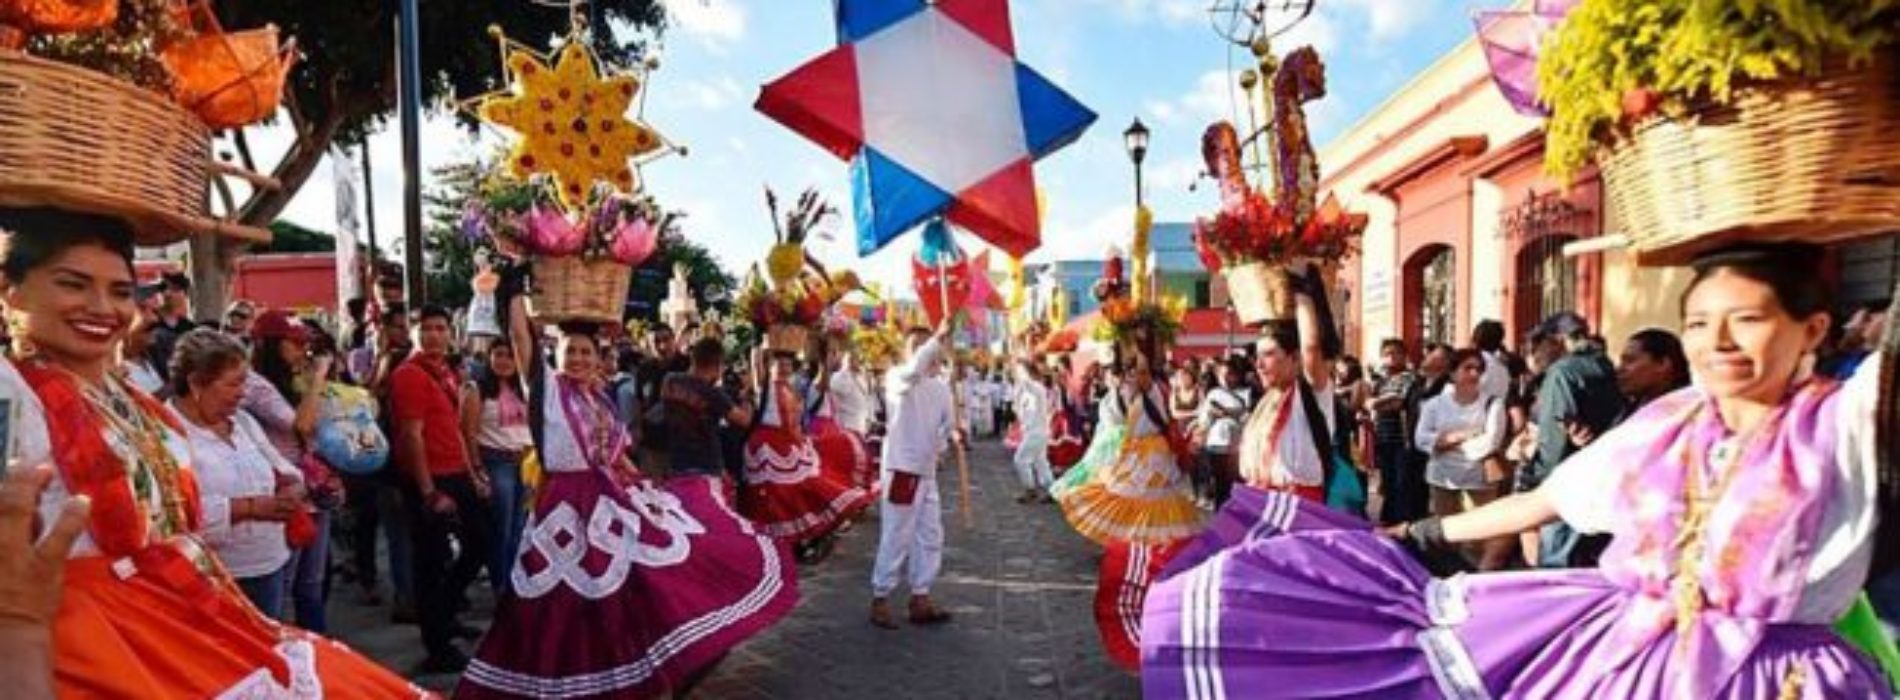 Arriban a Oaxaca miles de turistas para celebrar la
Guelaguetza